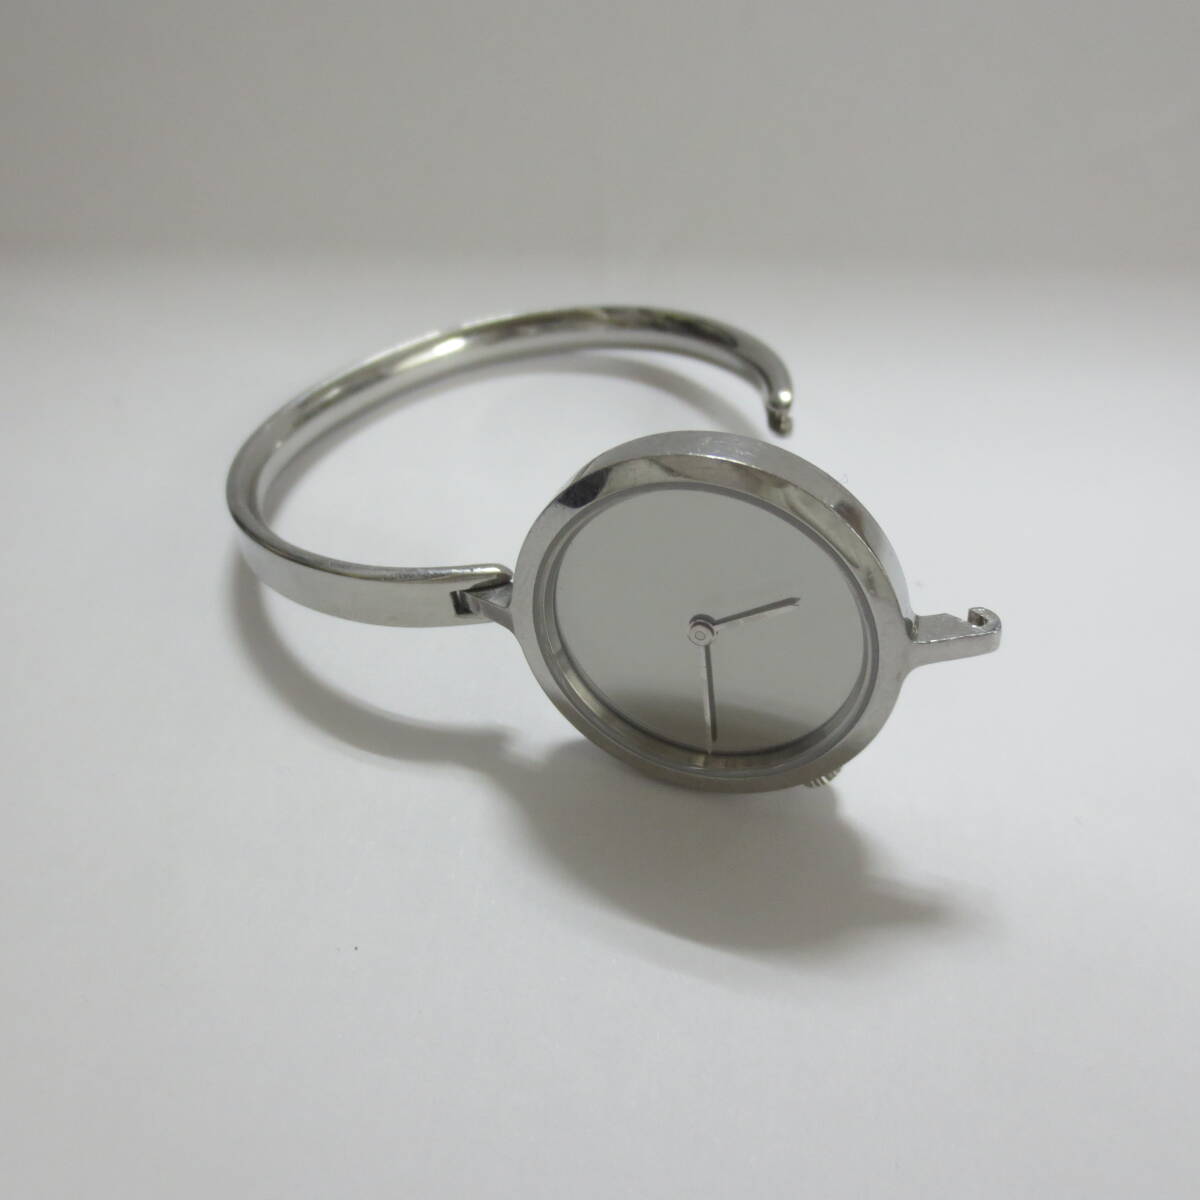 0 George Jensen 337 Vivienne na высокий n браслет часы подлинный товар 